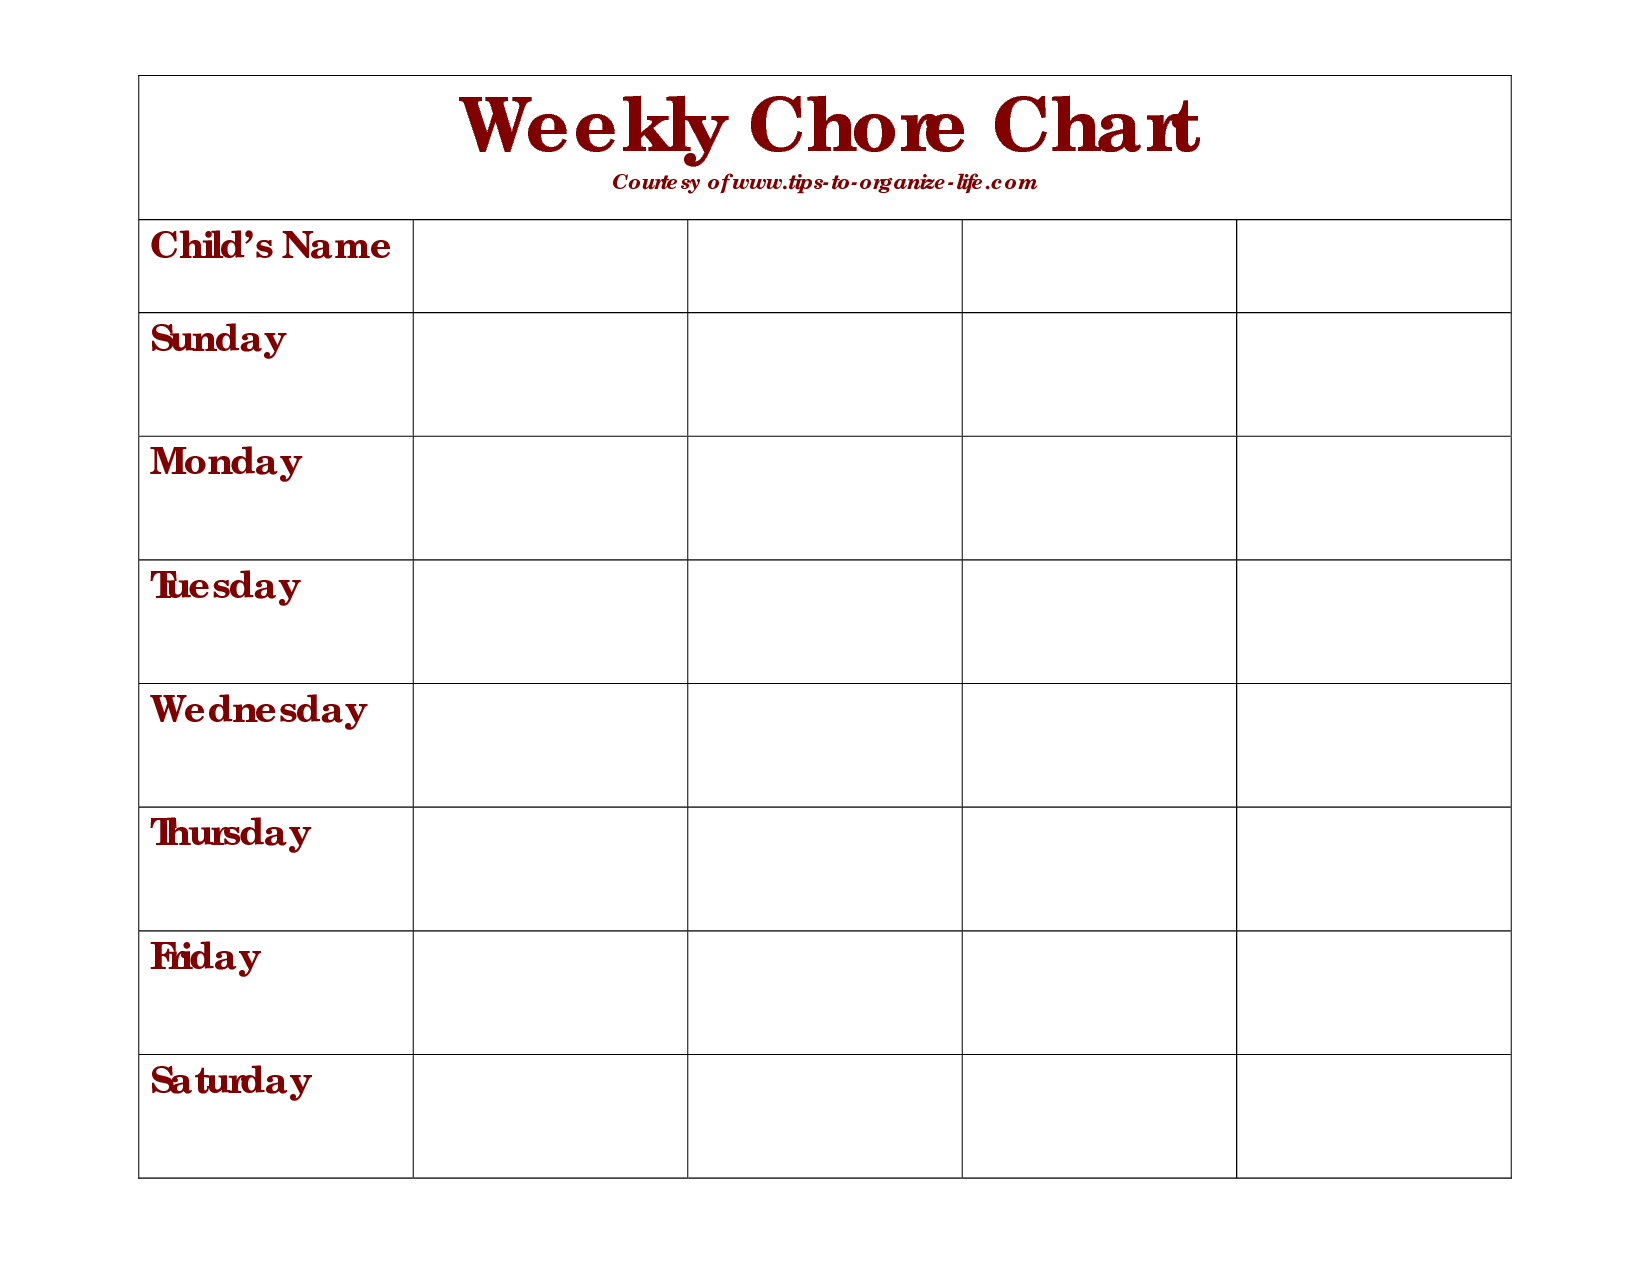 weekly chore chart | Daily chore charts, Chore chart template, Family